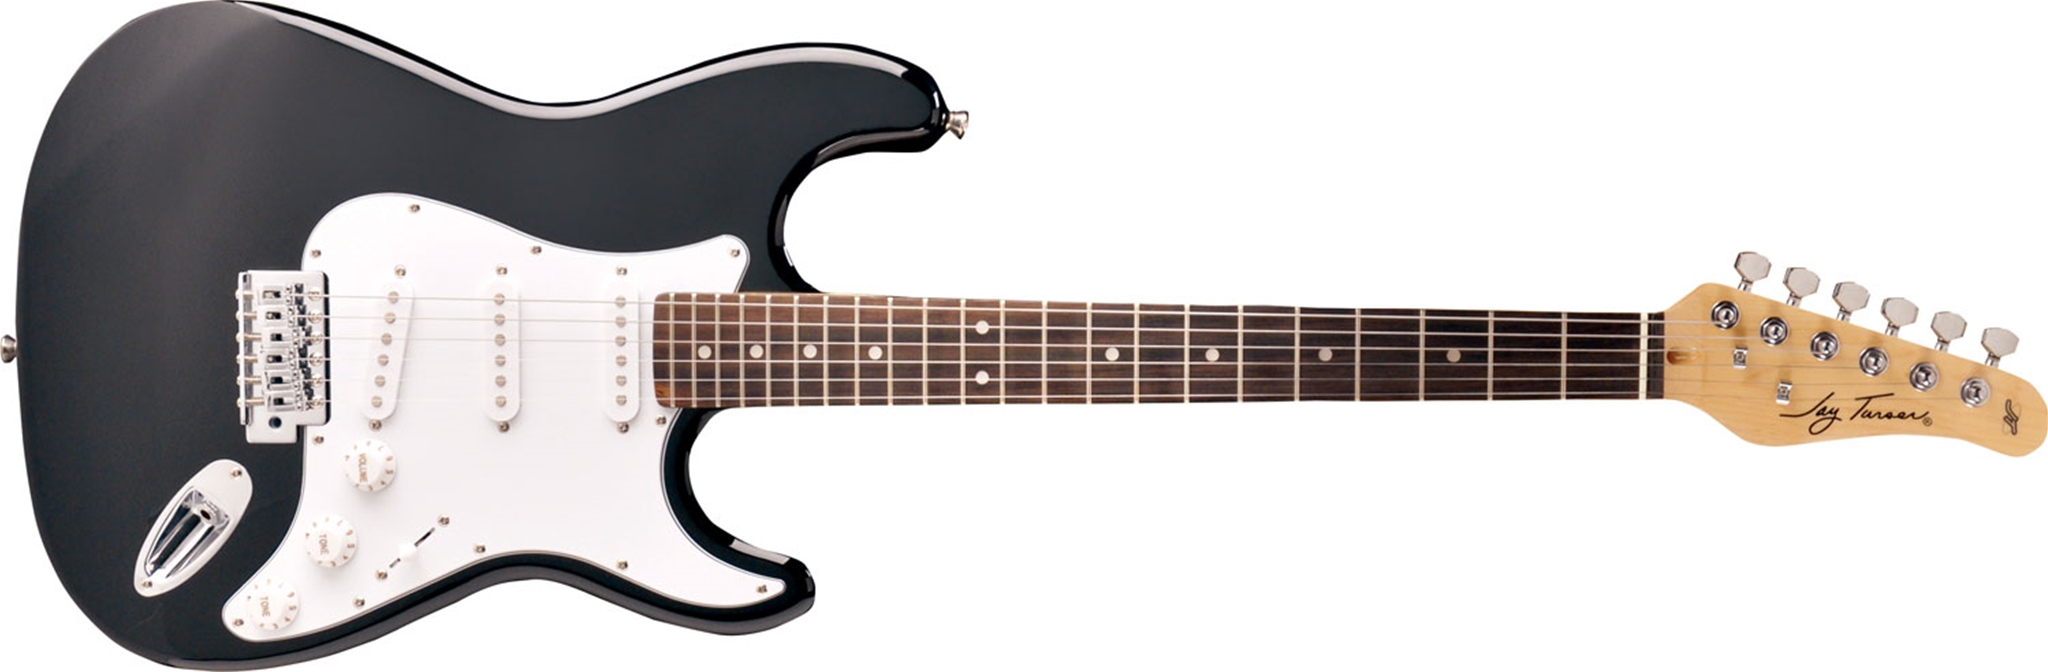 Jay Turser JT-300 Black   6-String  Electric Guitar